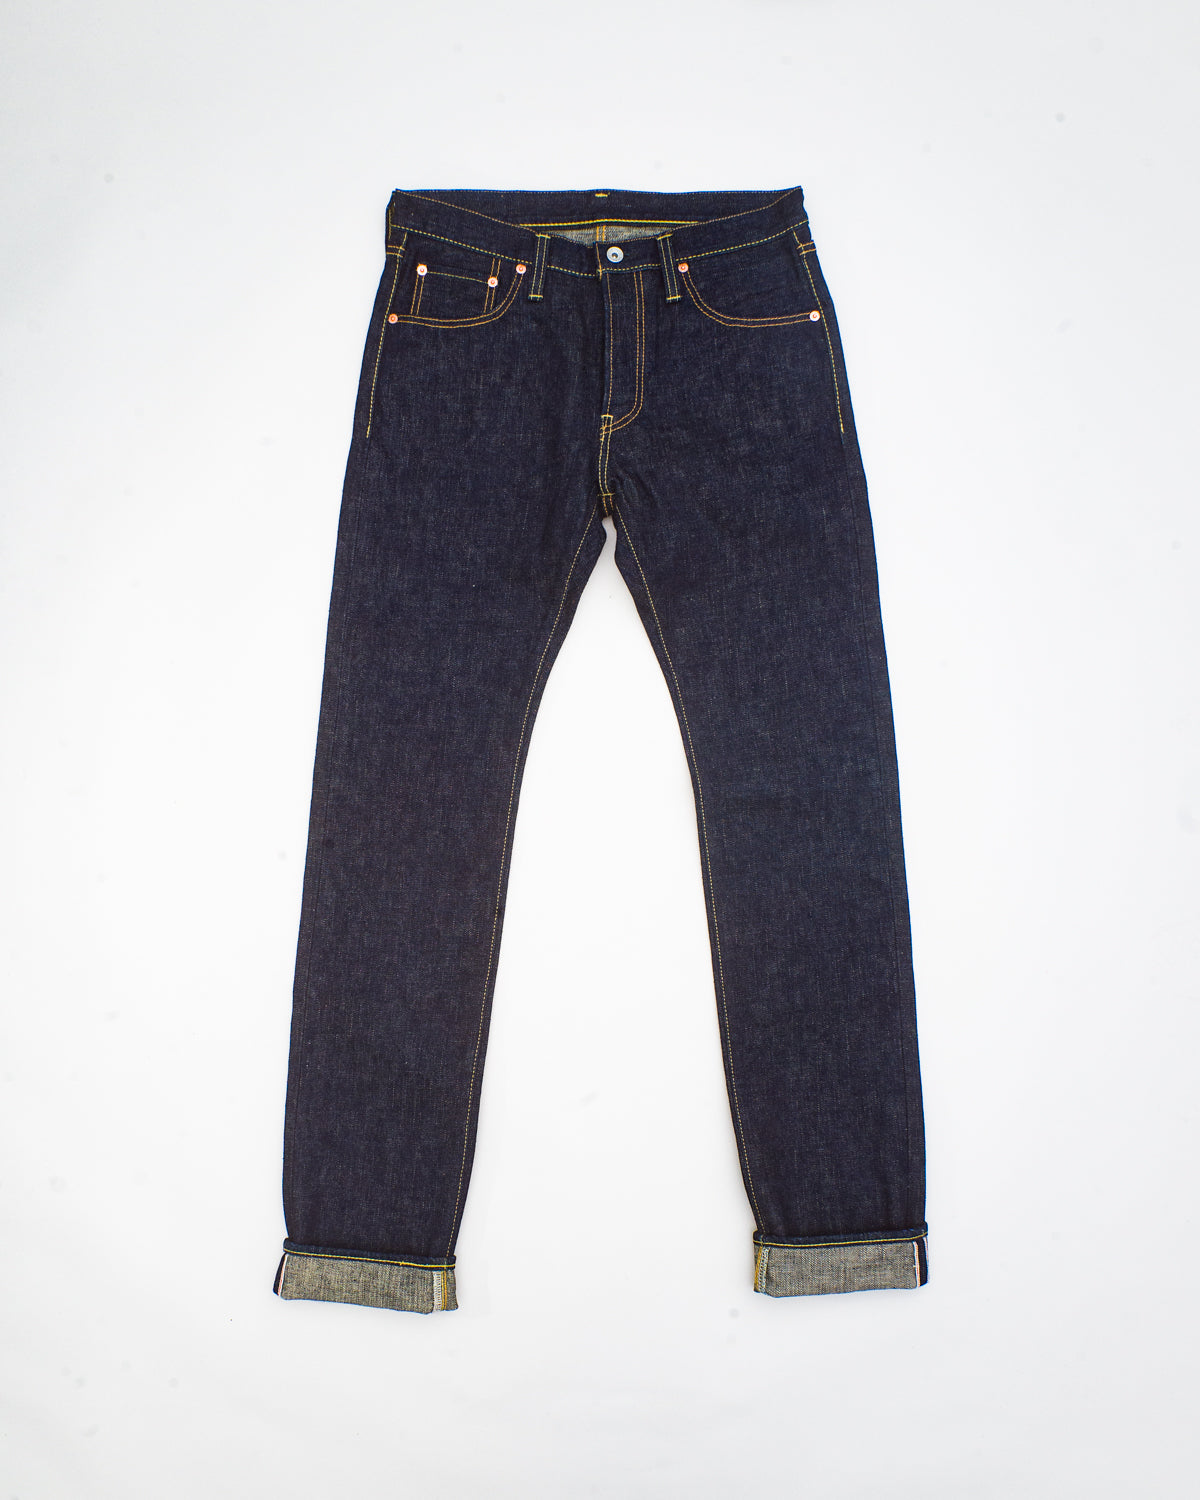 25oz Selvedge Denim Super Slim Jeans - Indigo 555-XHS – Iron Shop Provisions